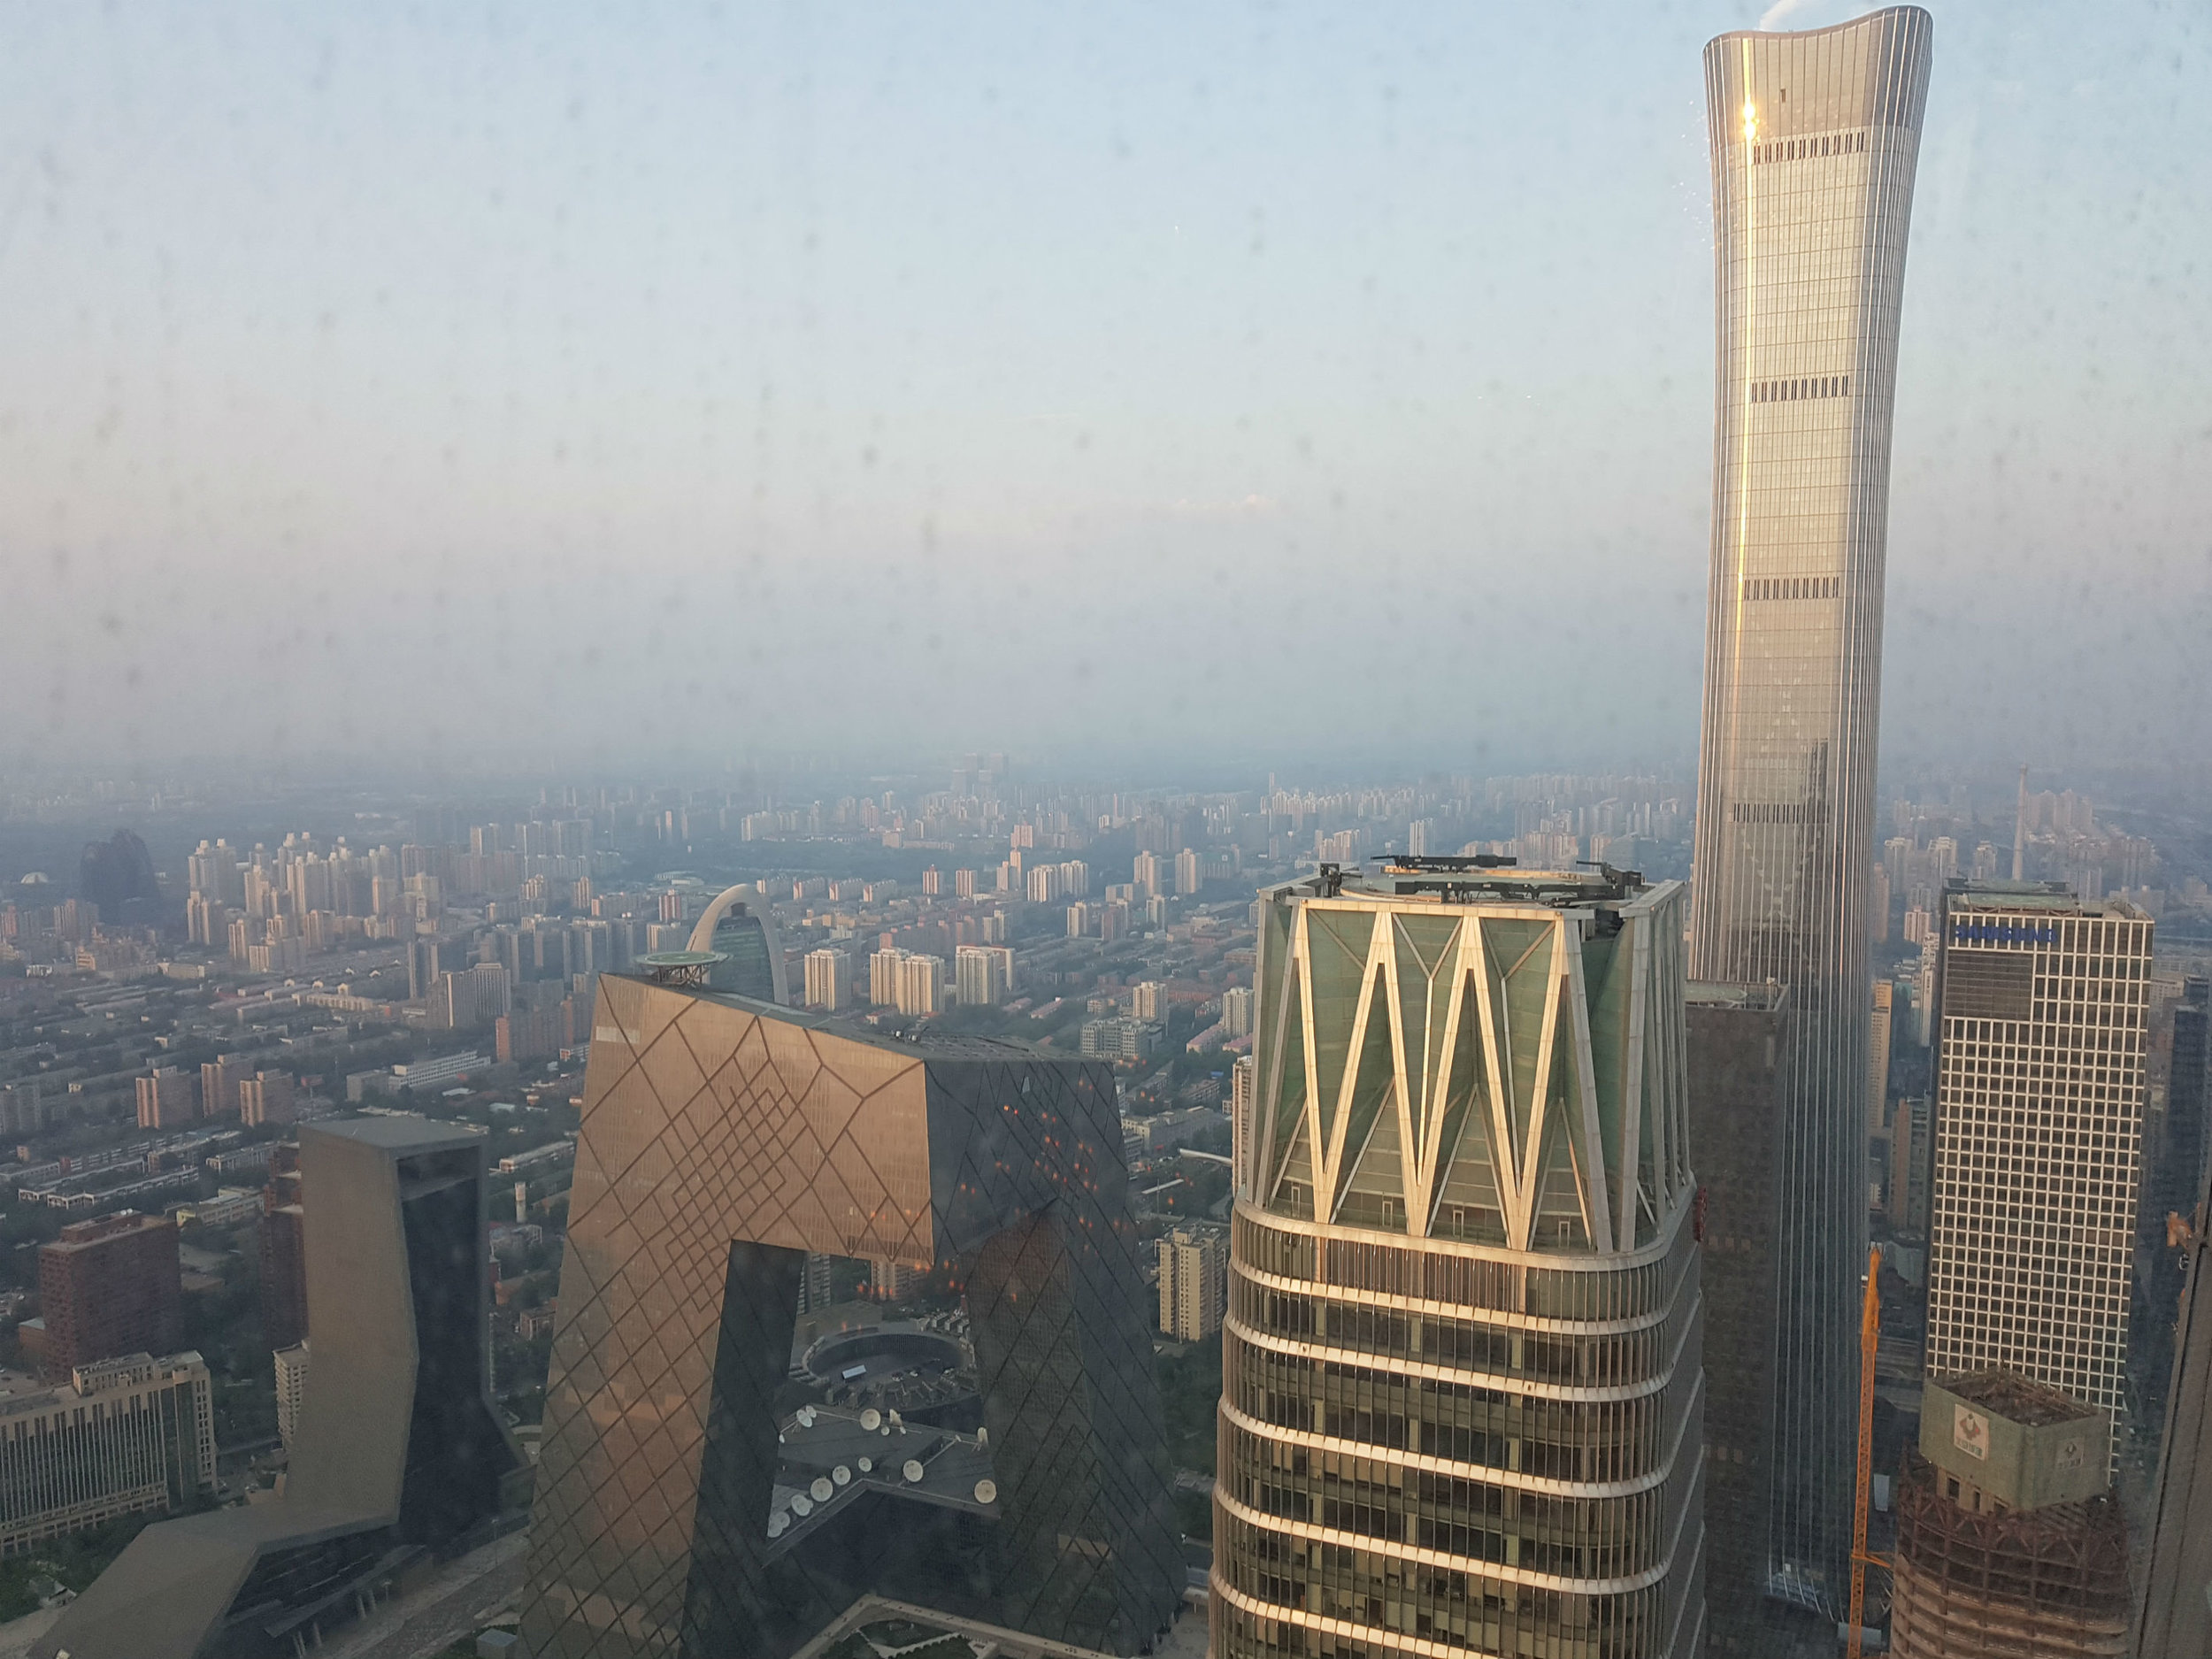 Birds-eye view across the financial district in Beijing